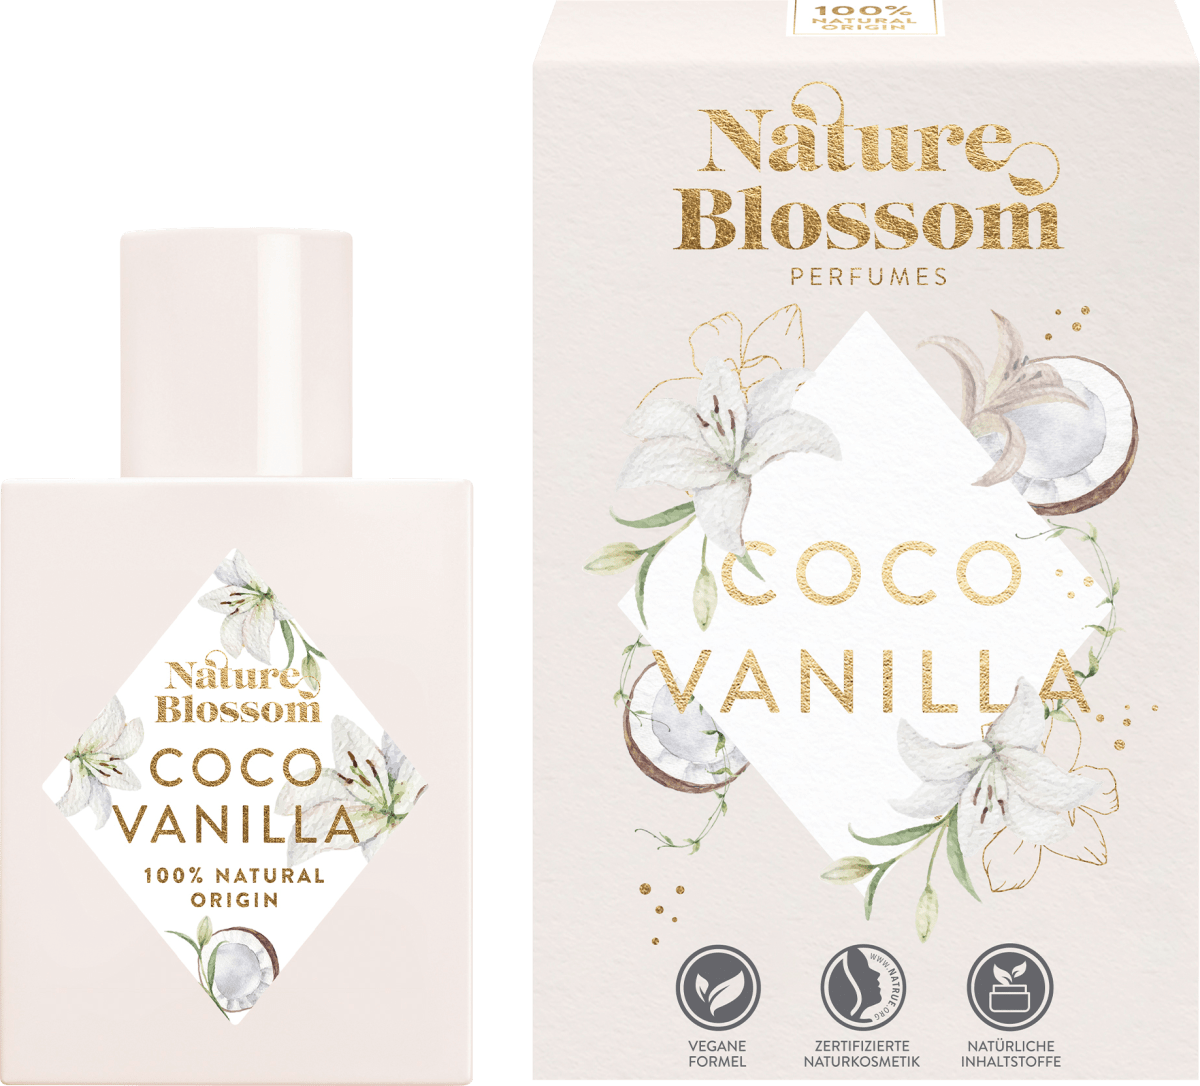 juniper lane coco vanilla perfume